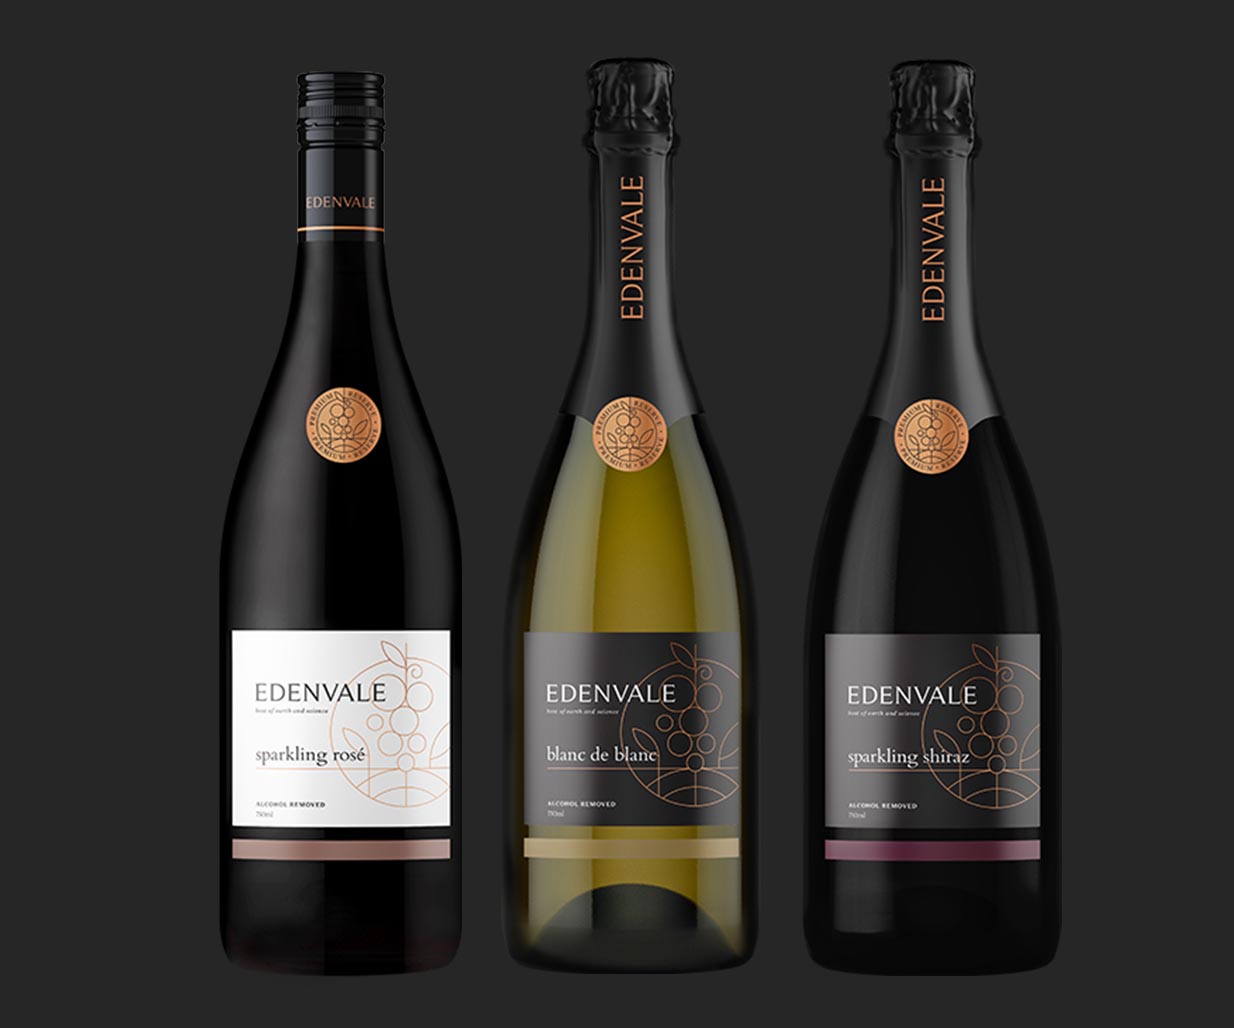 Australian wine label designers, Percept, create branding and packaging design for Edenvale, project image D